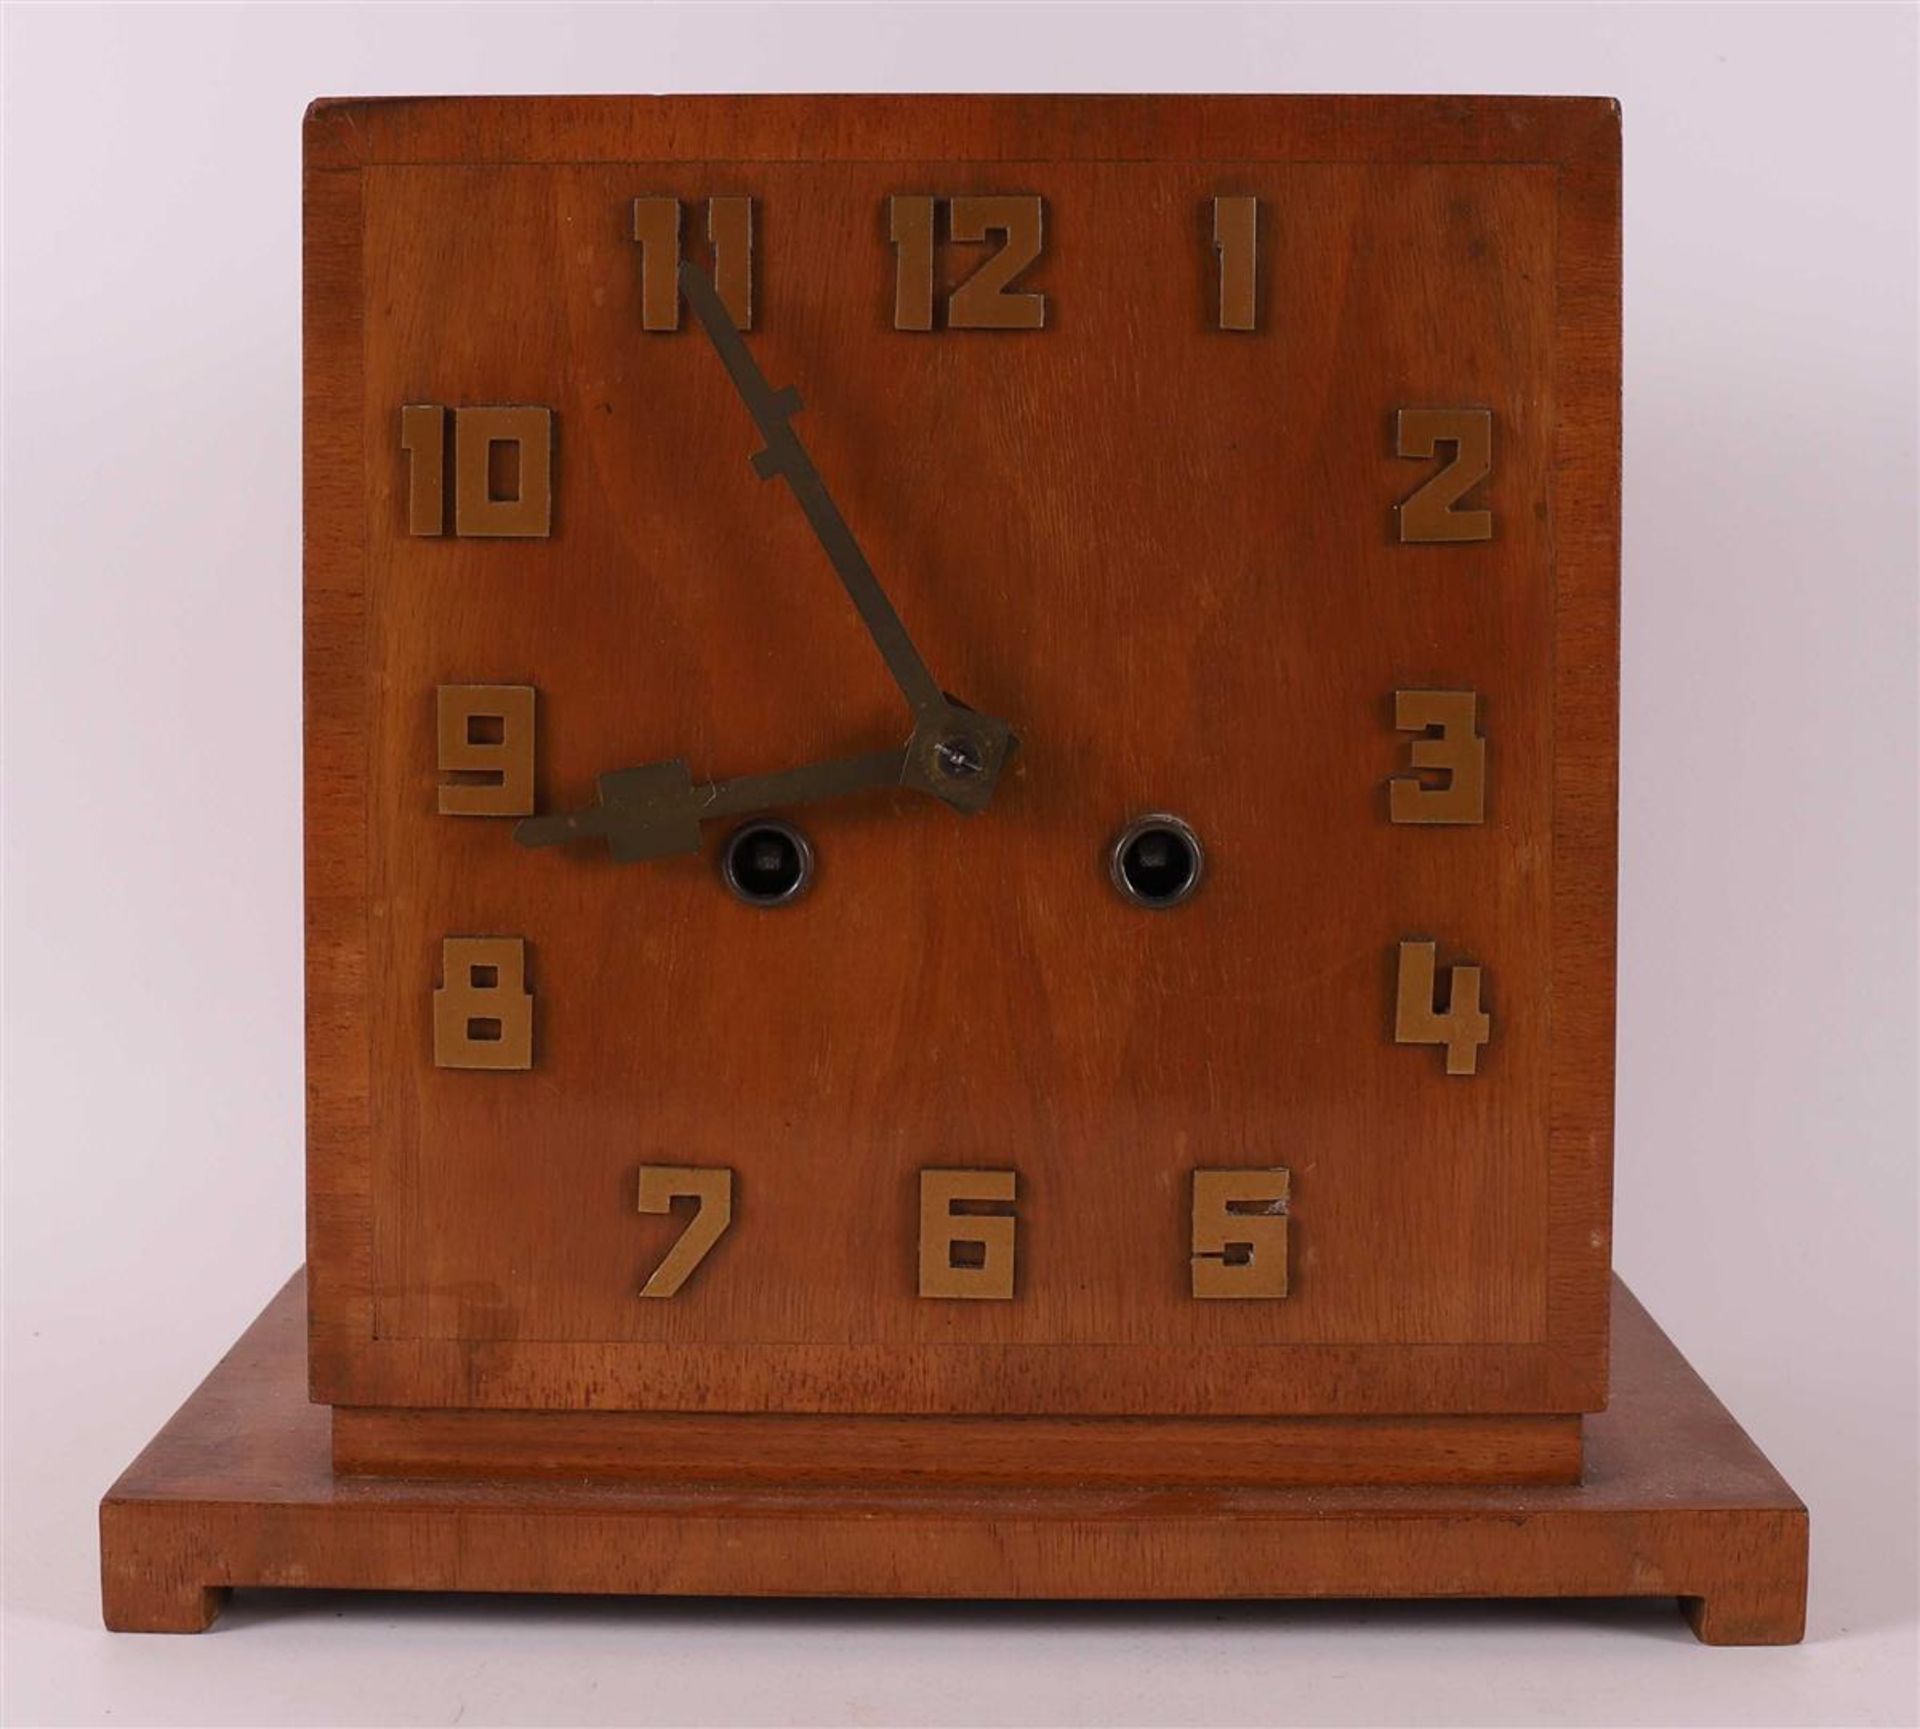 An Art Deco mantel clock in walnut casing, ca. 1930.